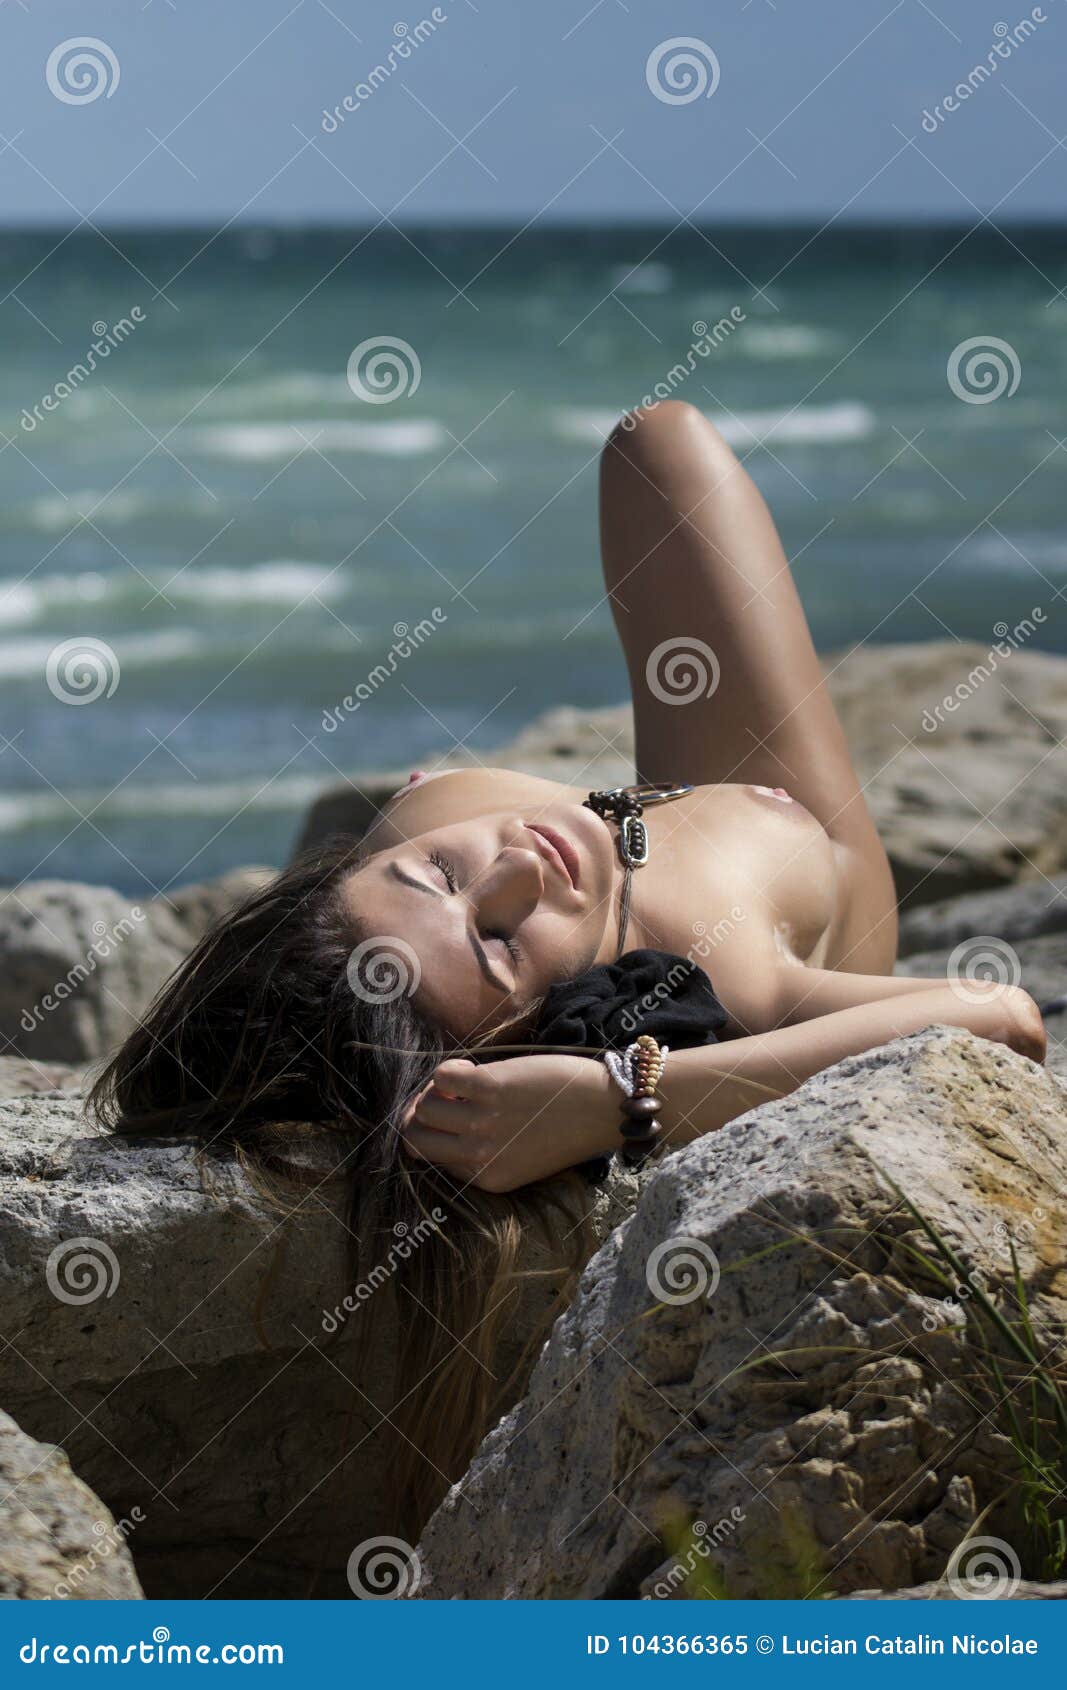 aurela balilaj recommends Nude Beach Woman Pics